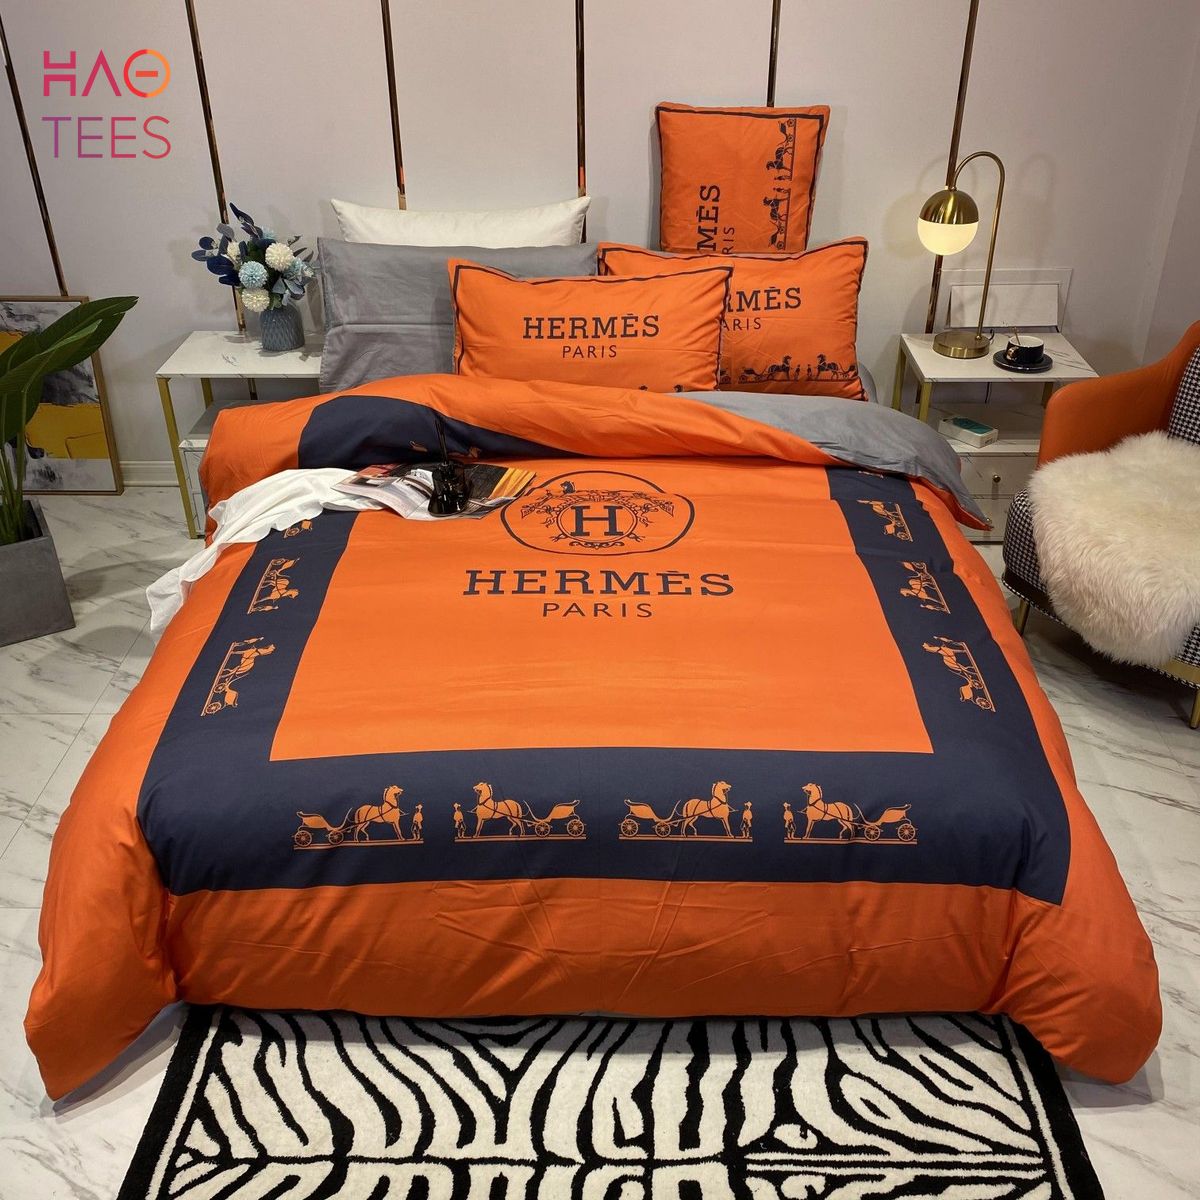 HOT Hermes Paris Luxury Brand Bedding Sets And Bedroom Sets